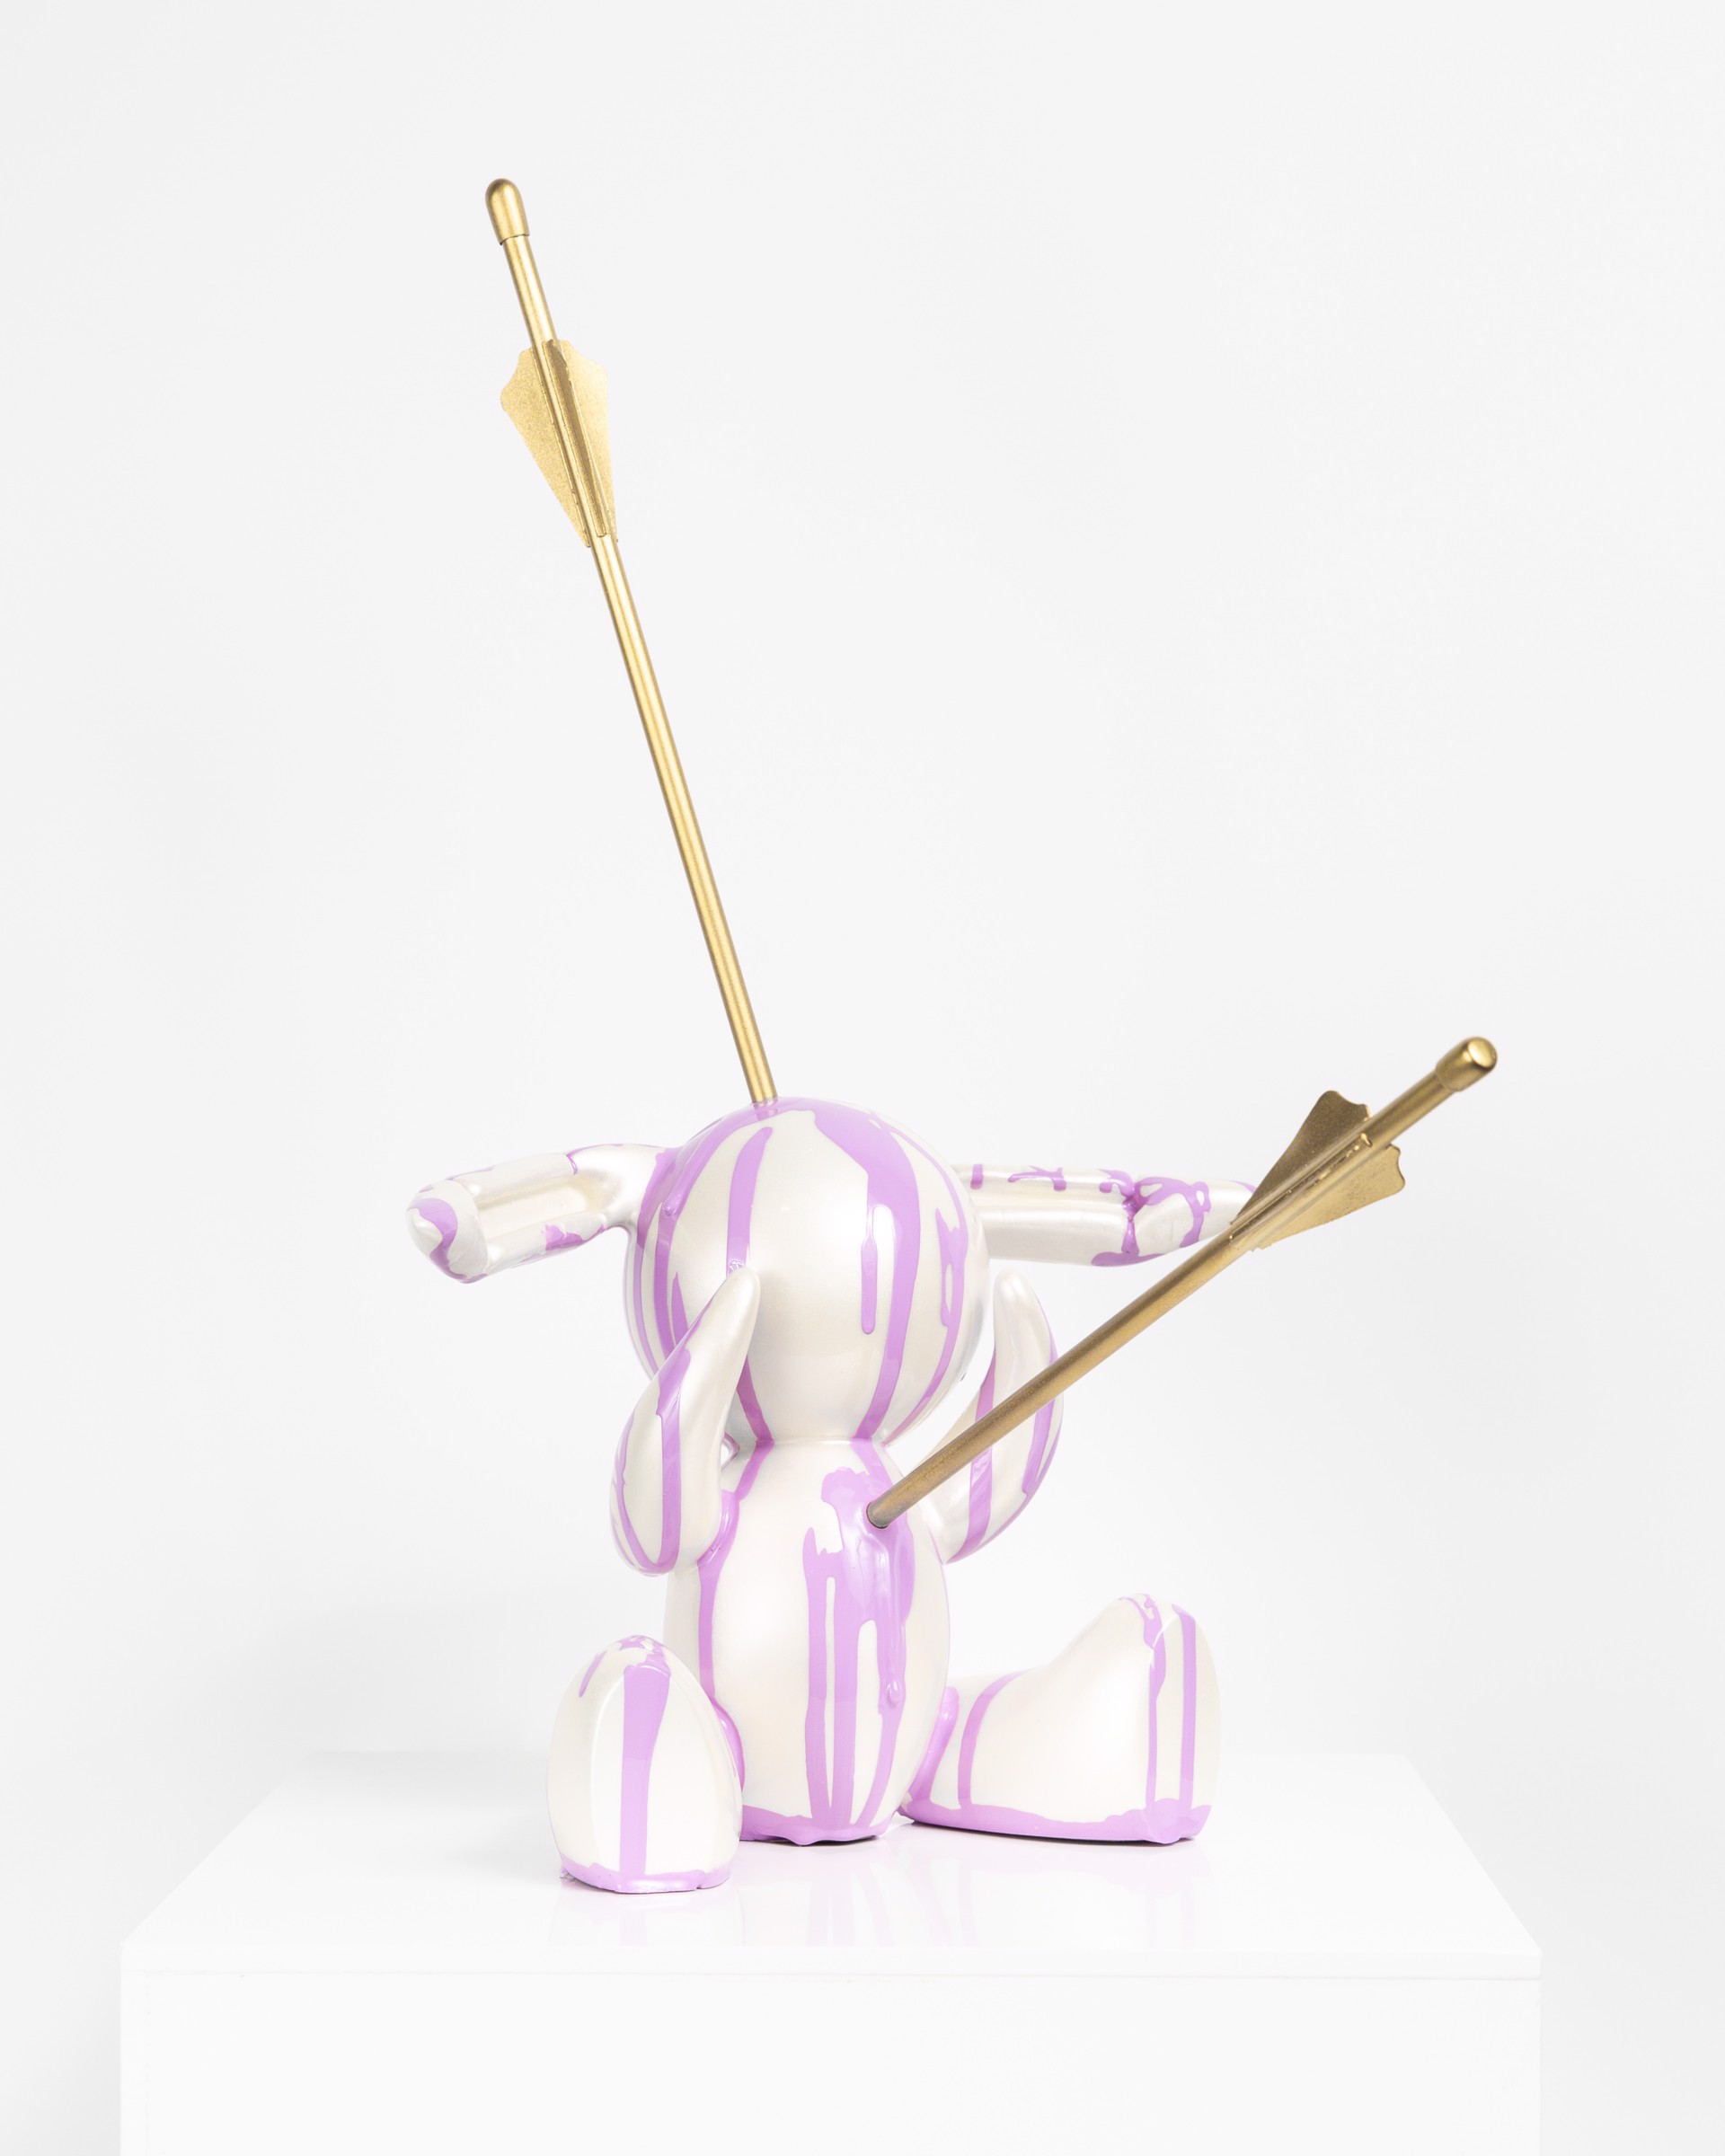 Follow the White Balloon Rabbit - Series 1 (Lavender) by Joe Suzuki